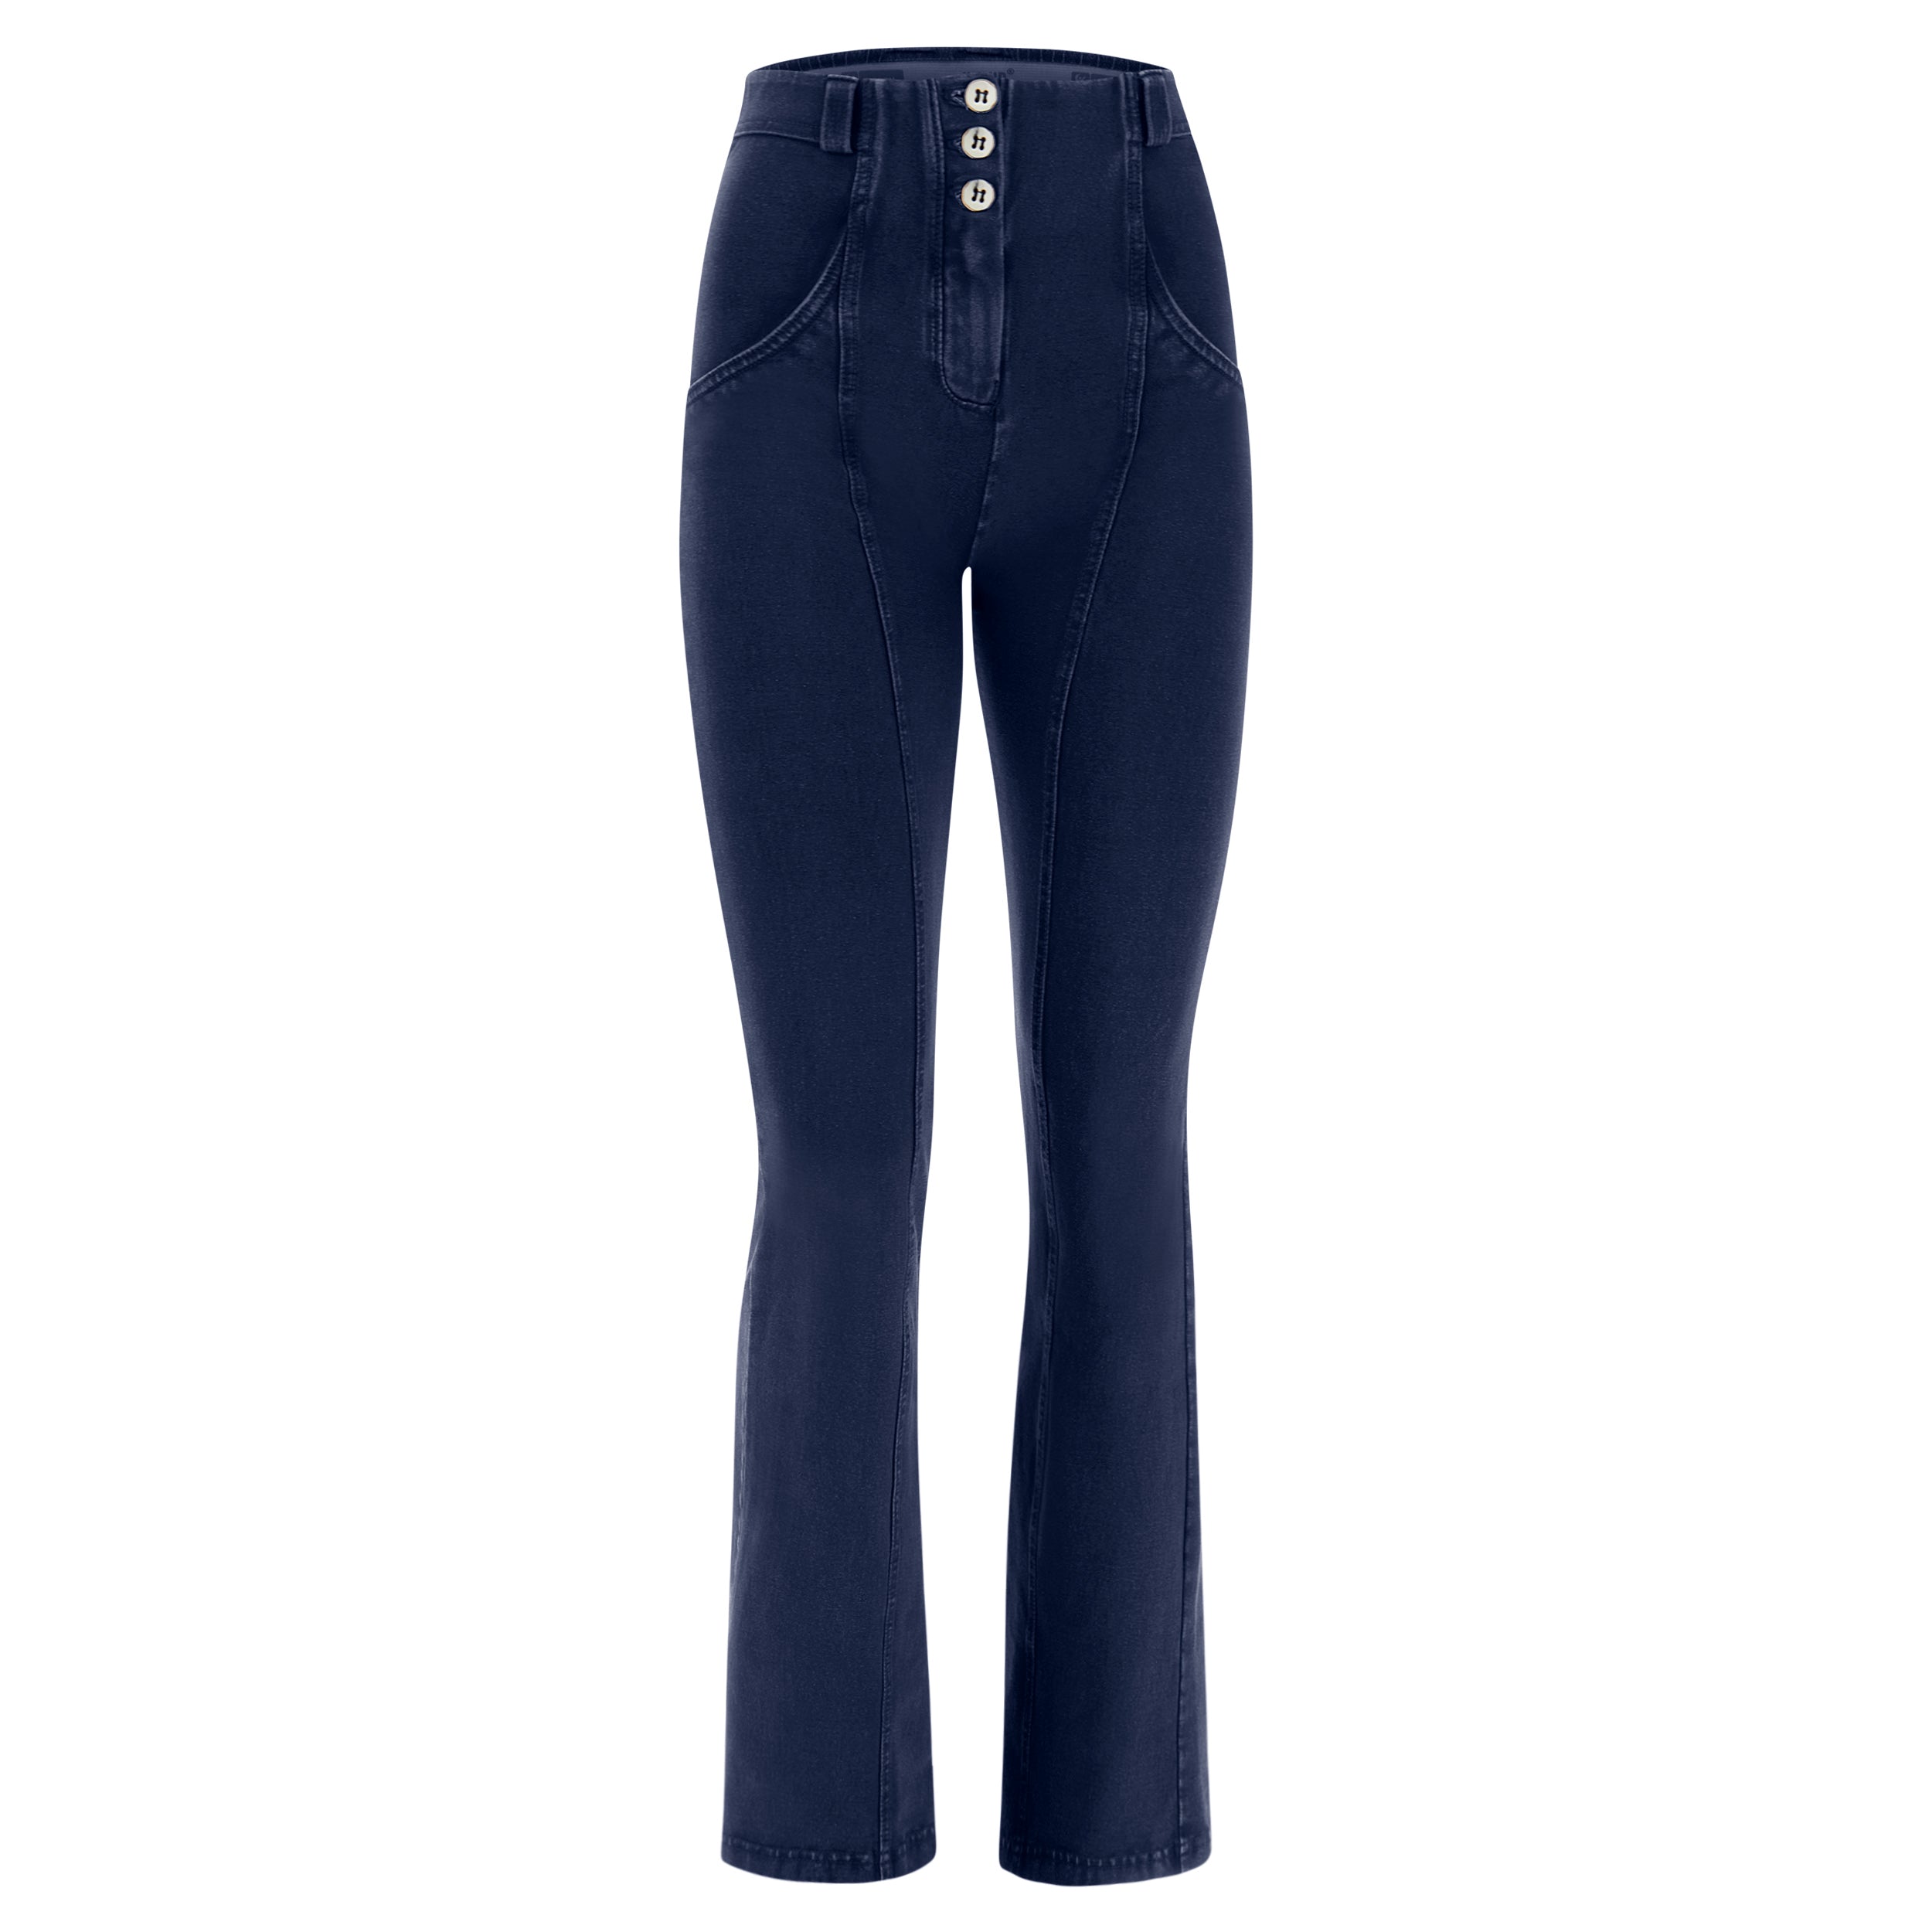 Flared jeans wijde pijp denim blauw stoer sixties pants jeans broek hoge taille high waist push up shape wear